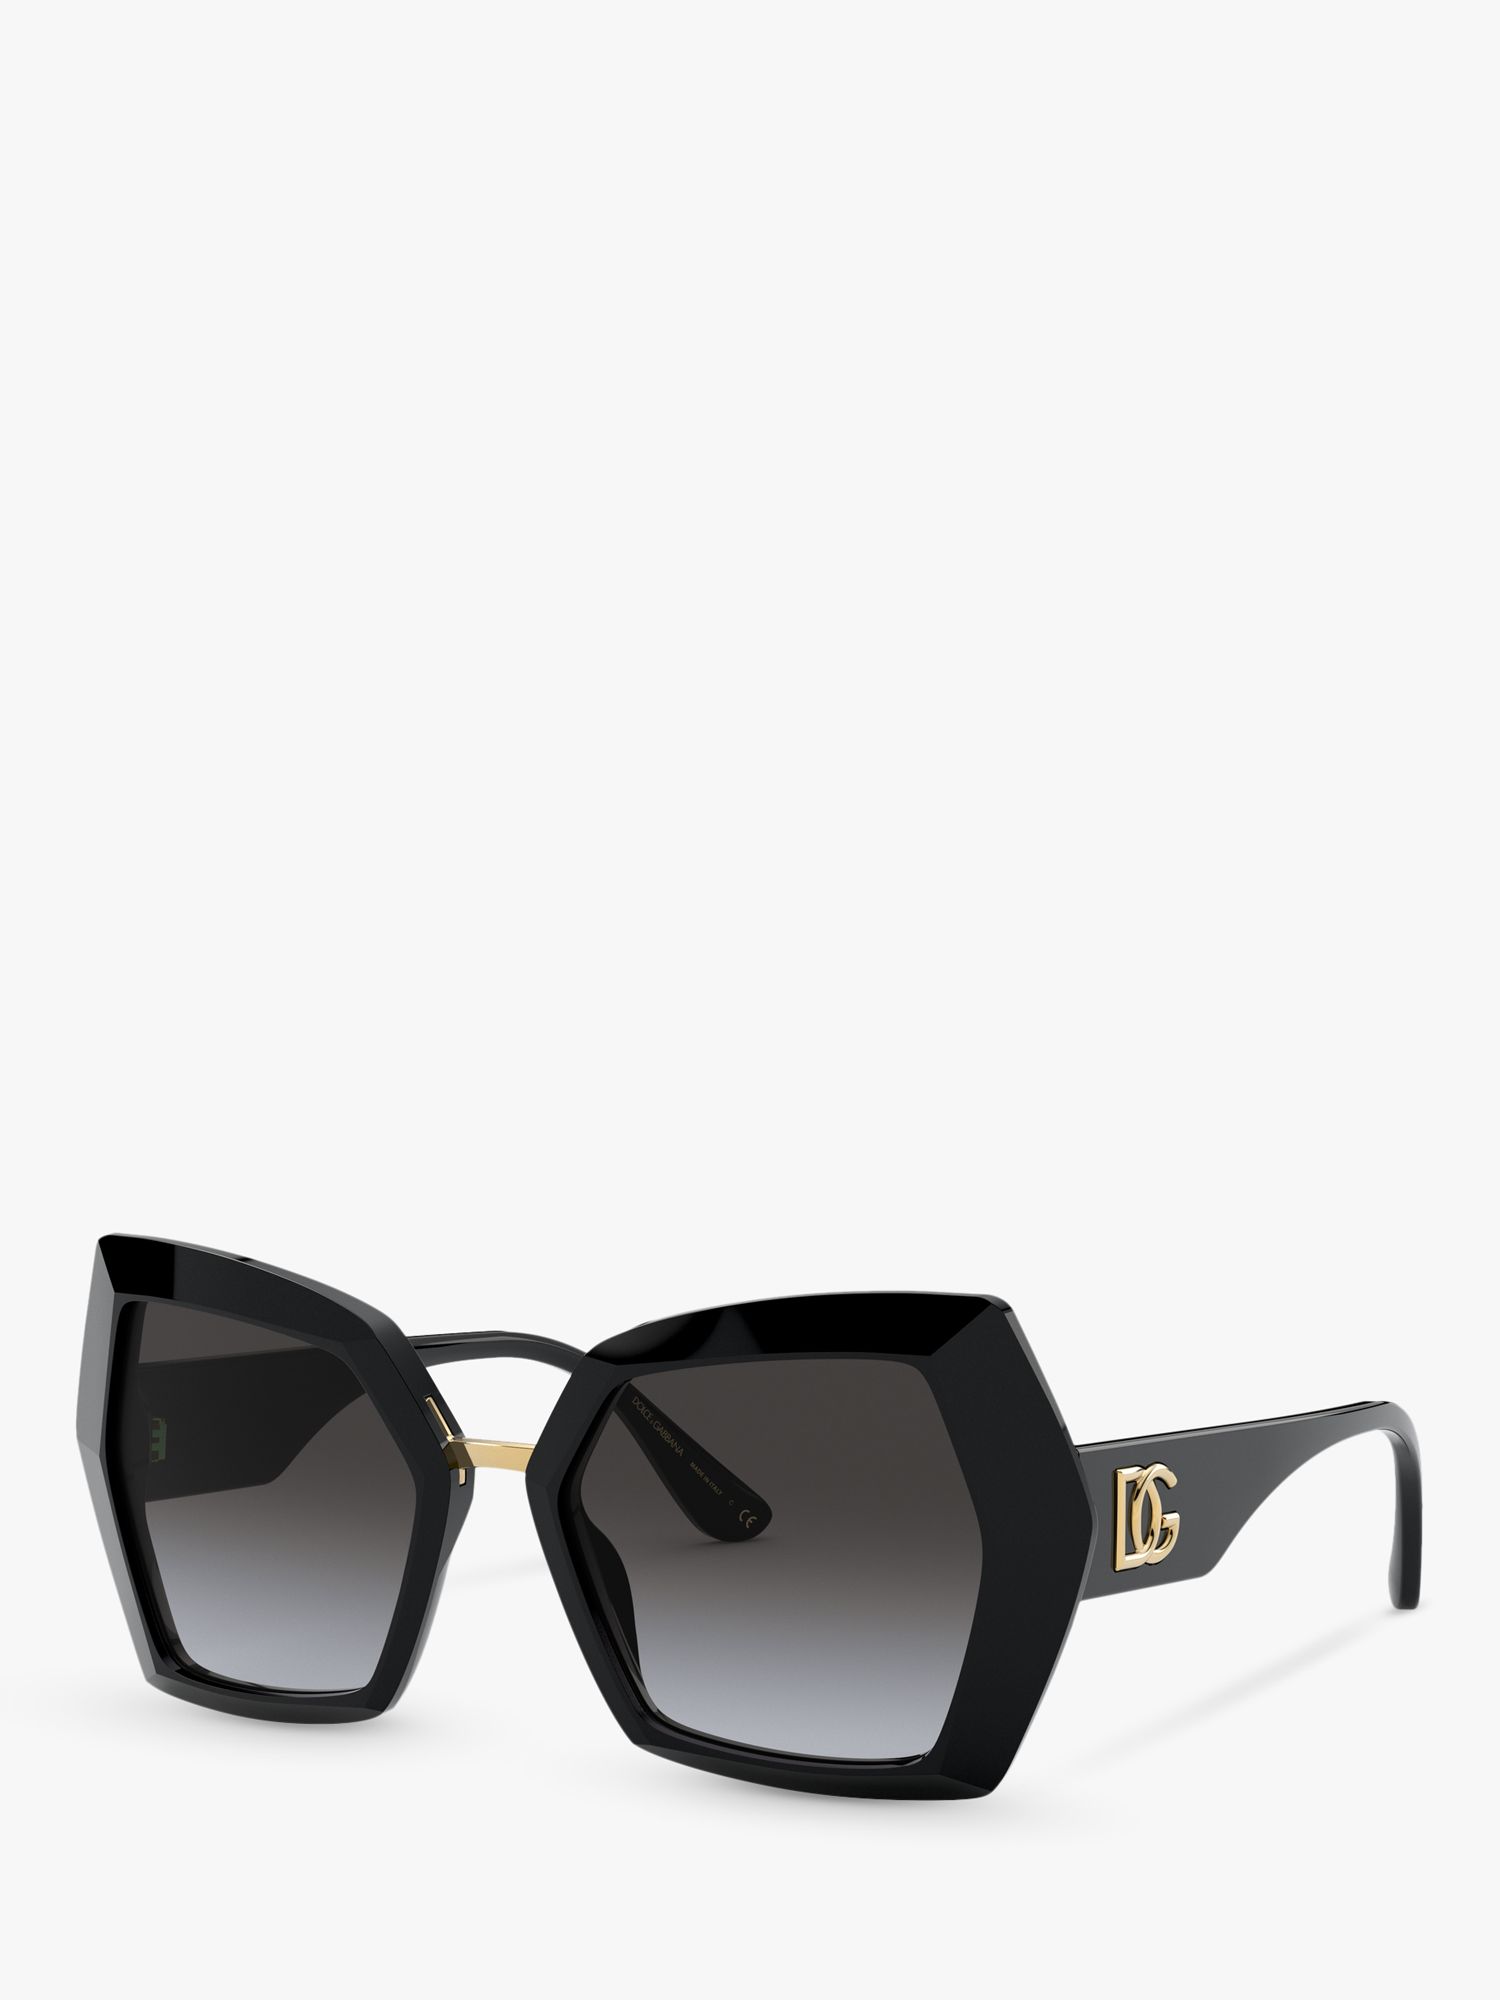 Dolce & Gabbana DG4377 Women's Chunky Hexagonal Cat's Eye Sunglasses,  Black/Grey Gradient at John Lewis & Partners